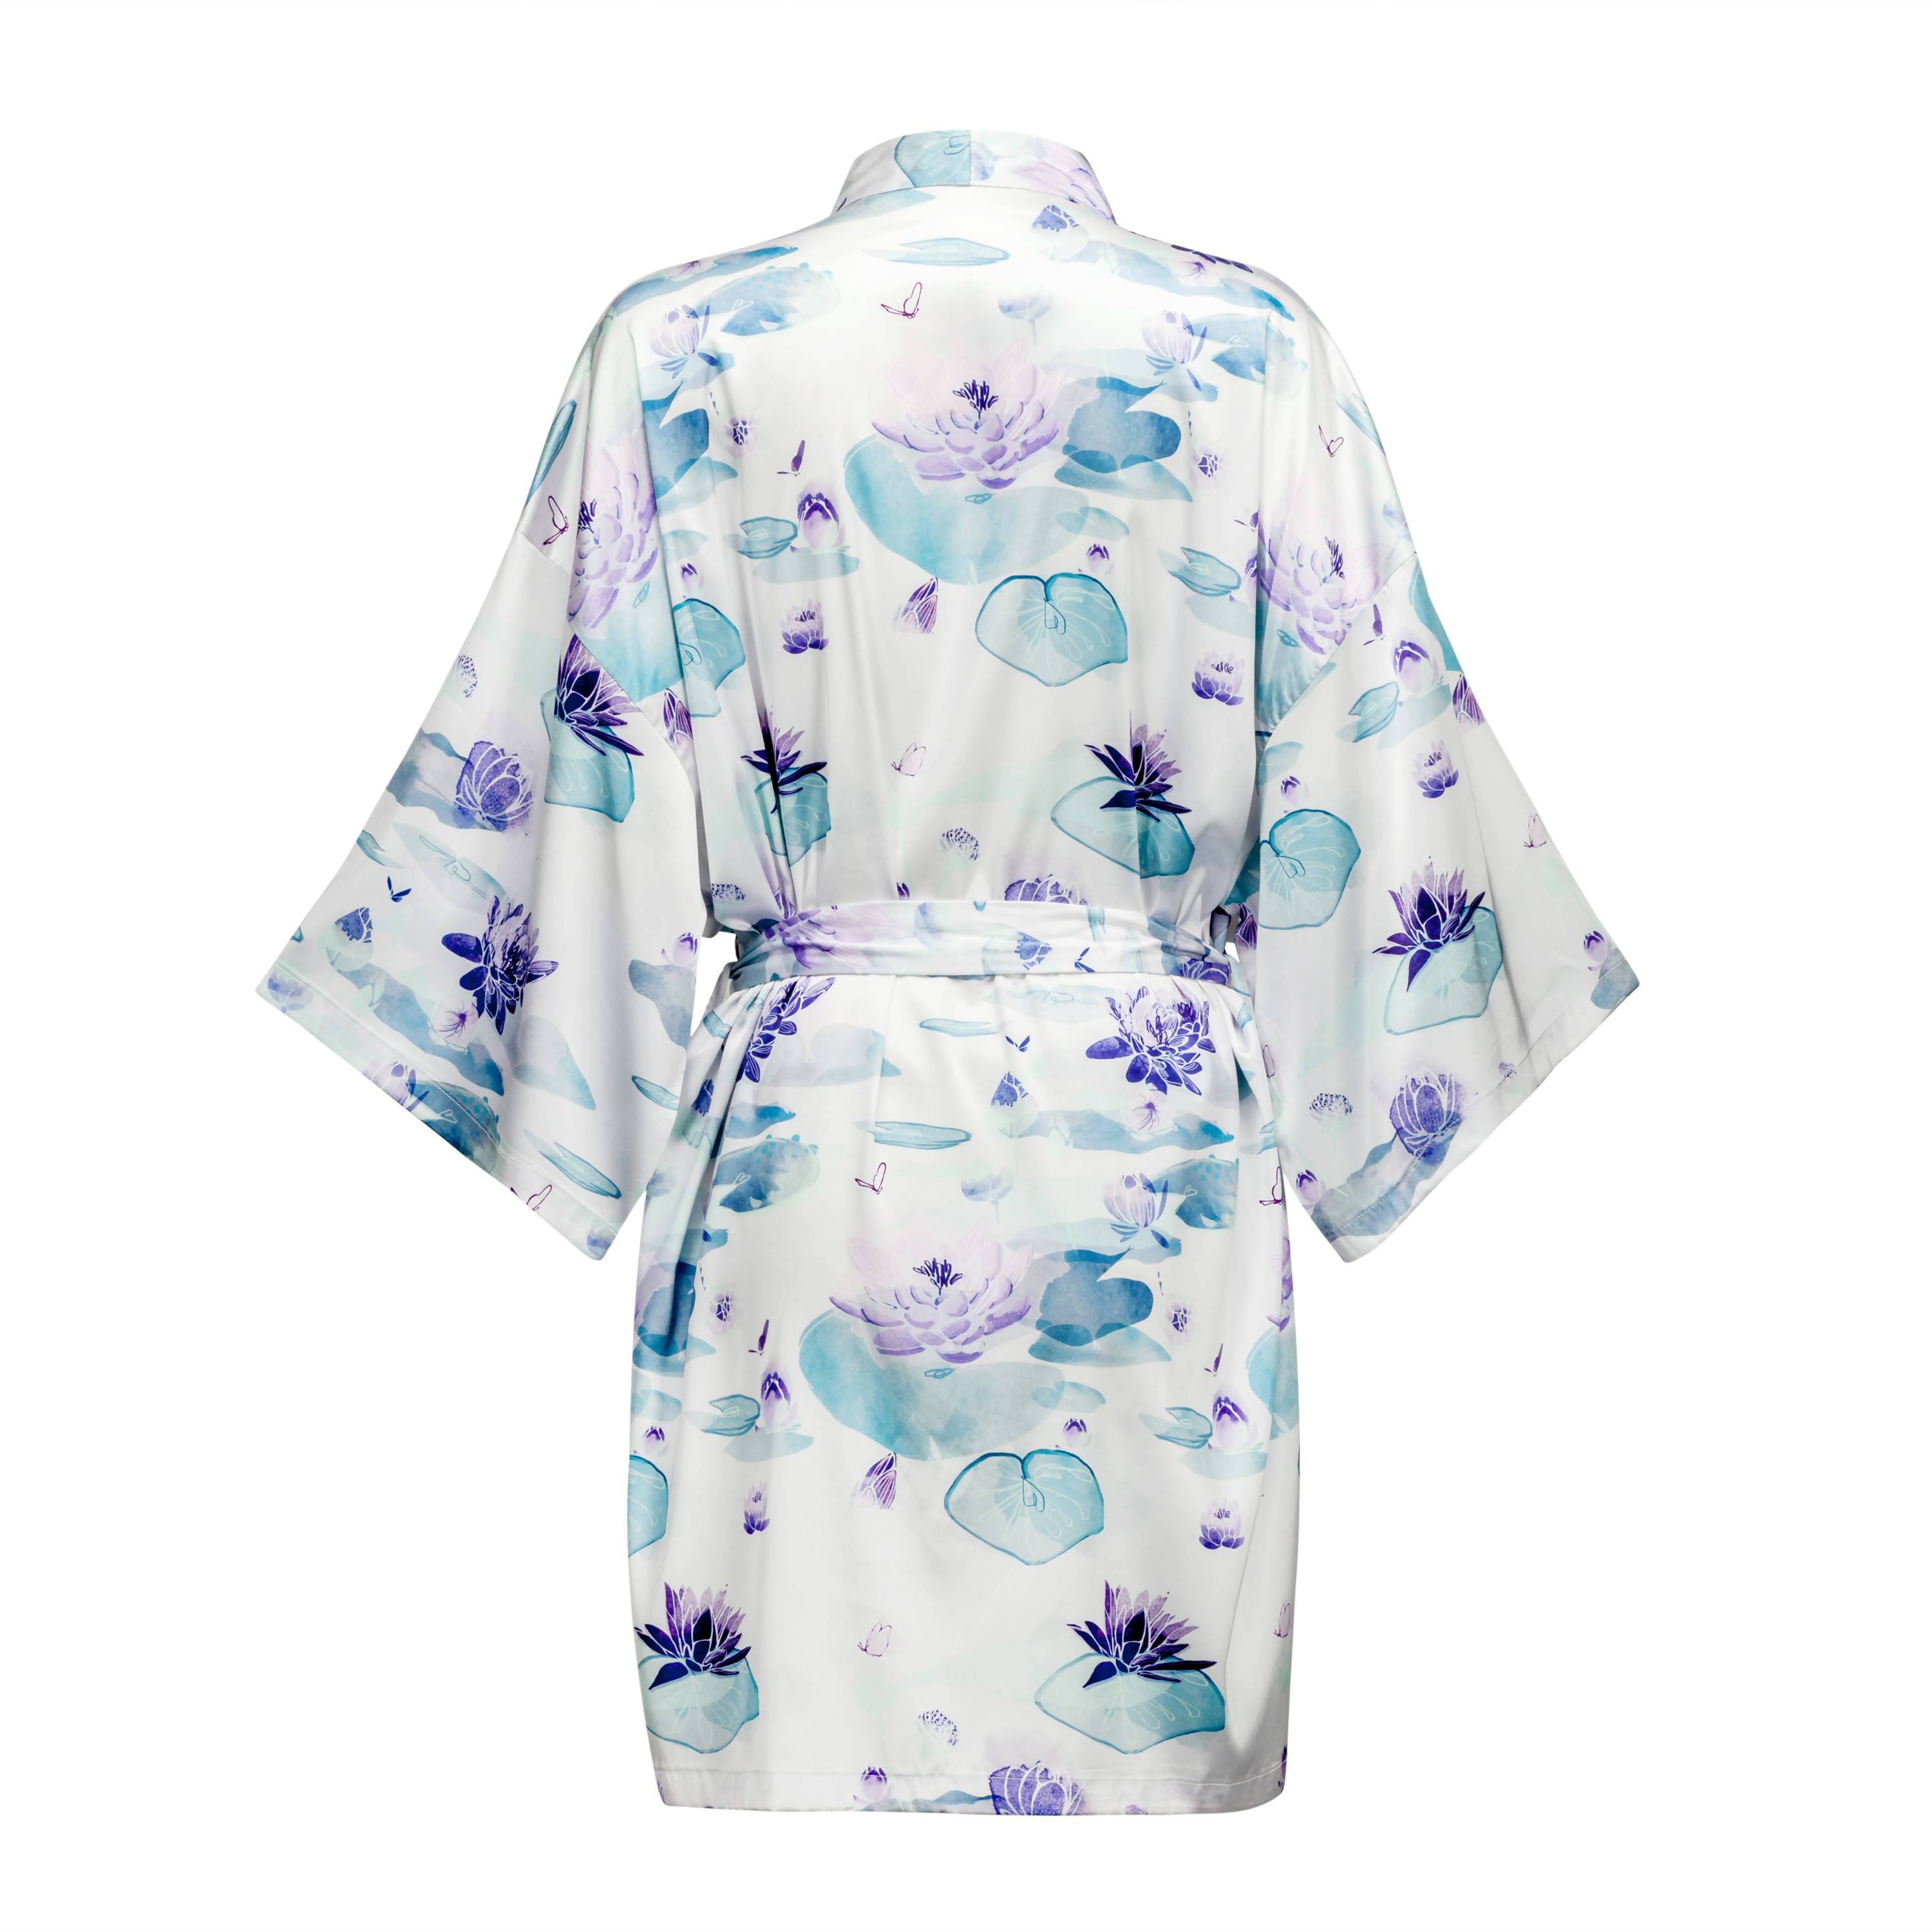 Lotus Flower Kimono Robe (Short) - Sleepwear for Women - The Mariposa Collection - Naiise